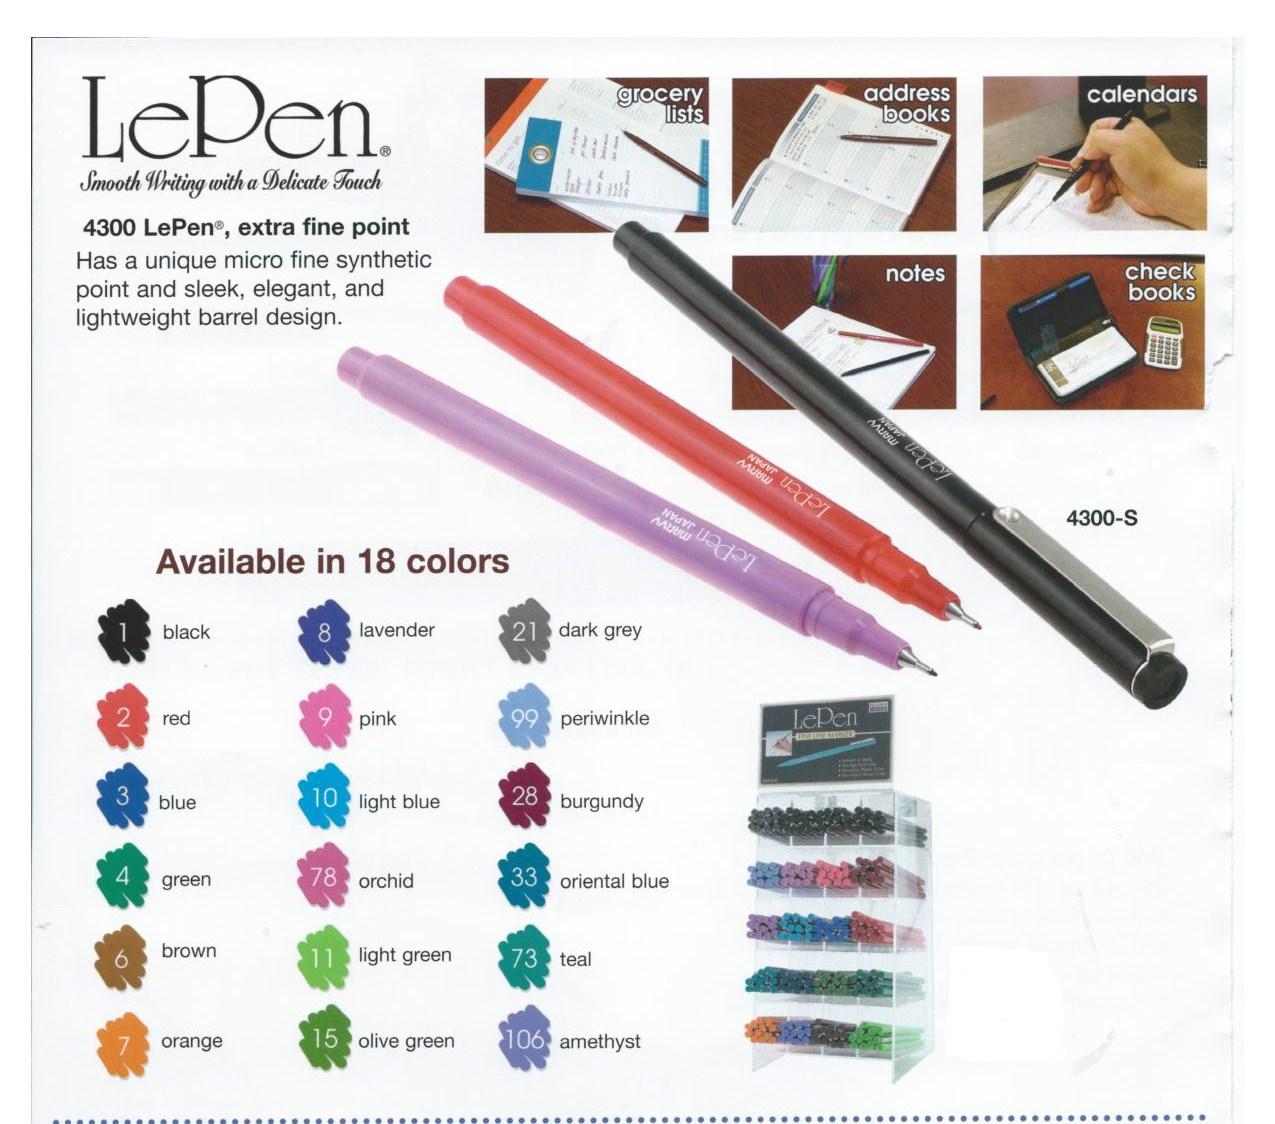 Marvy LePen 10 Pen Set